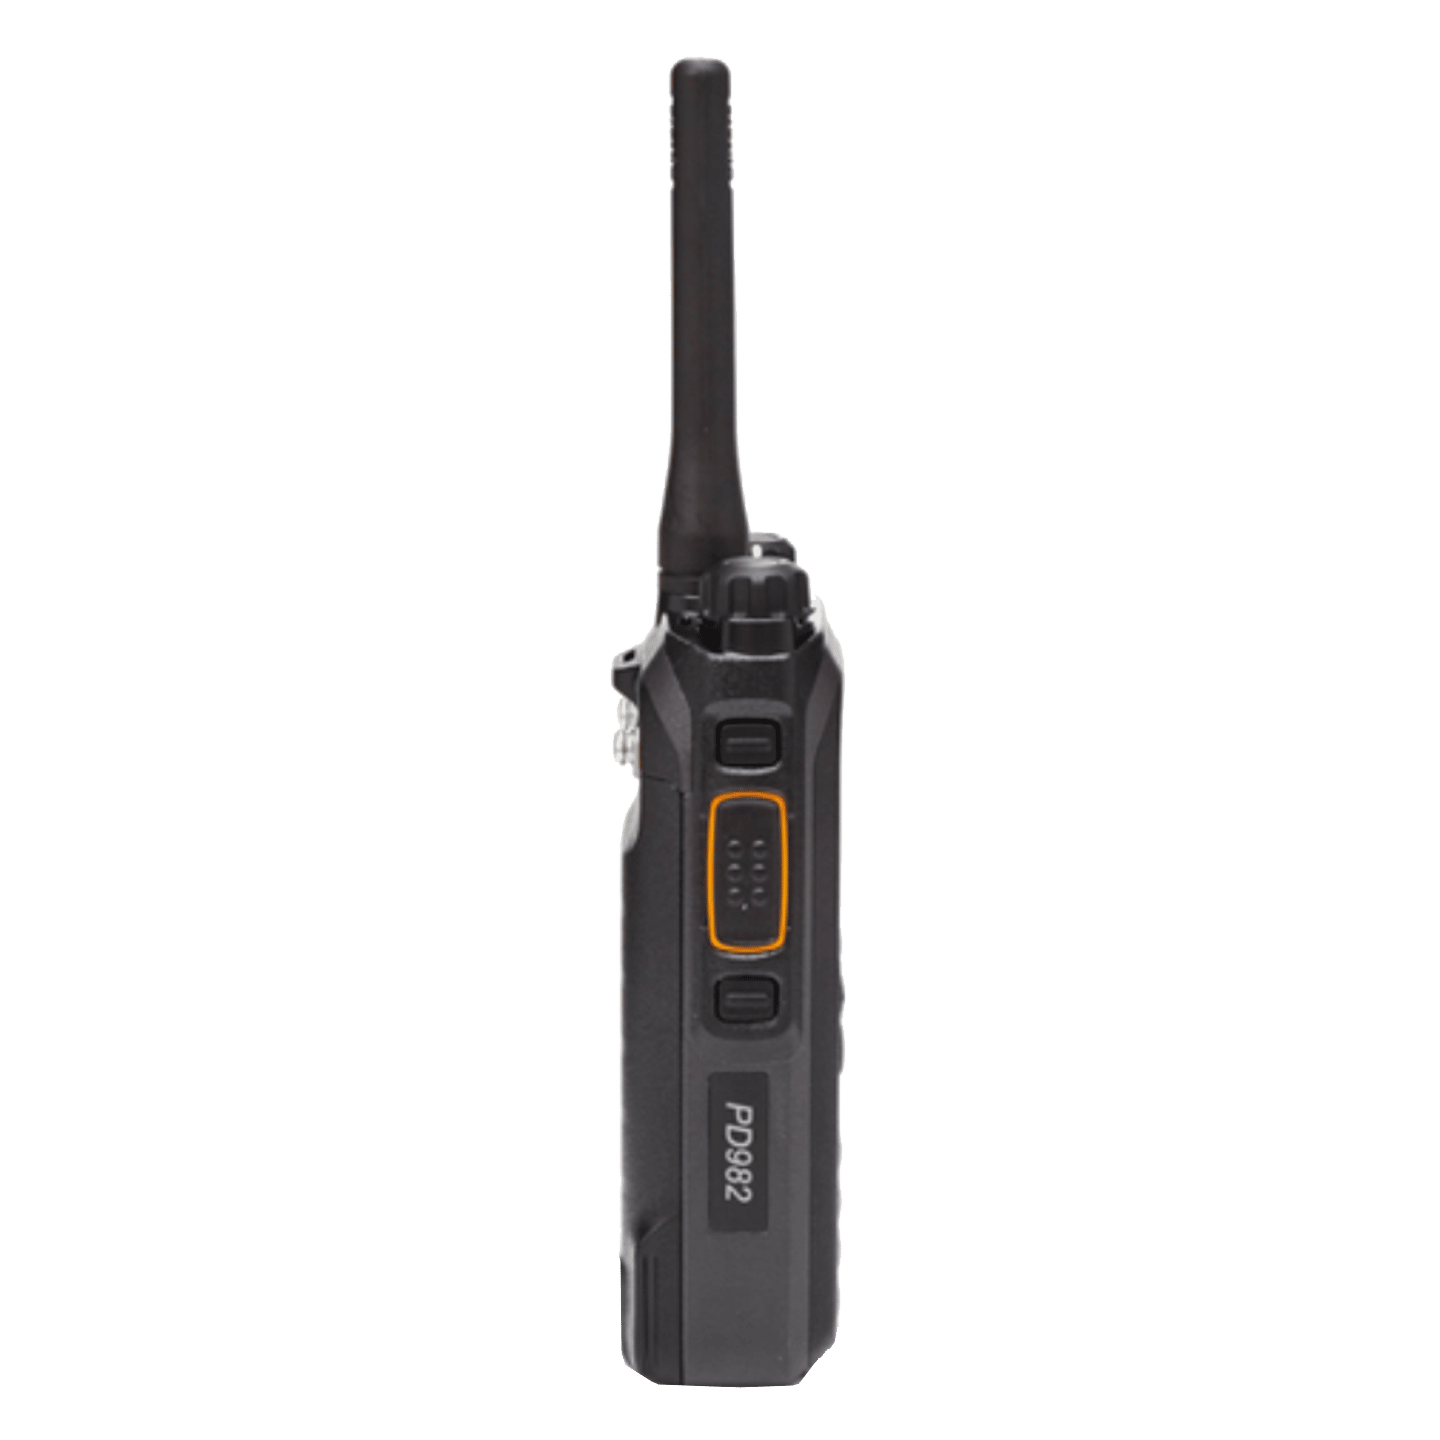 PD982i DMR Two-Way Radio | Hytera US Inc